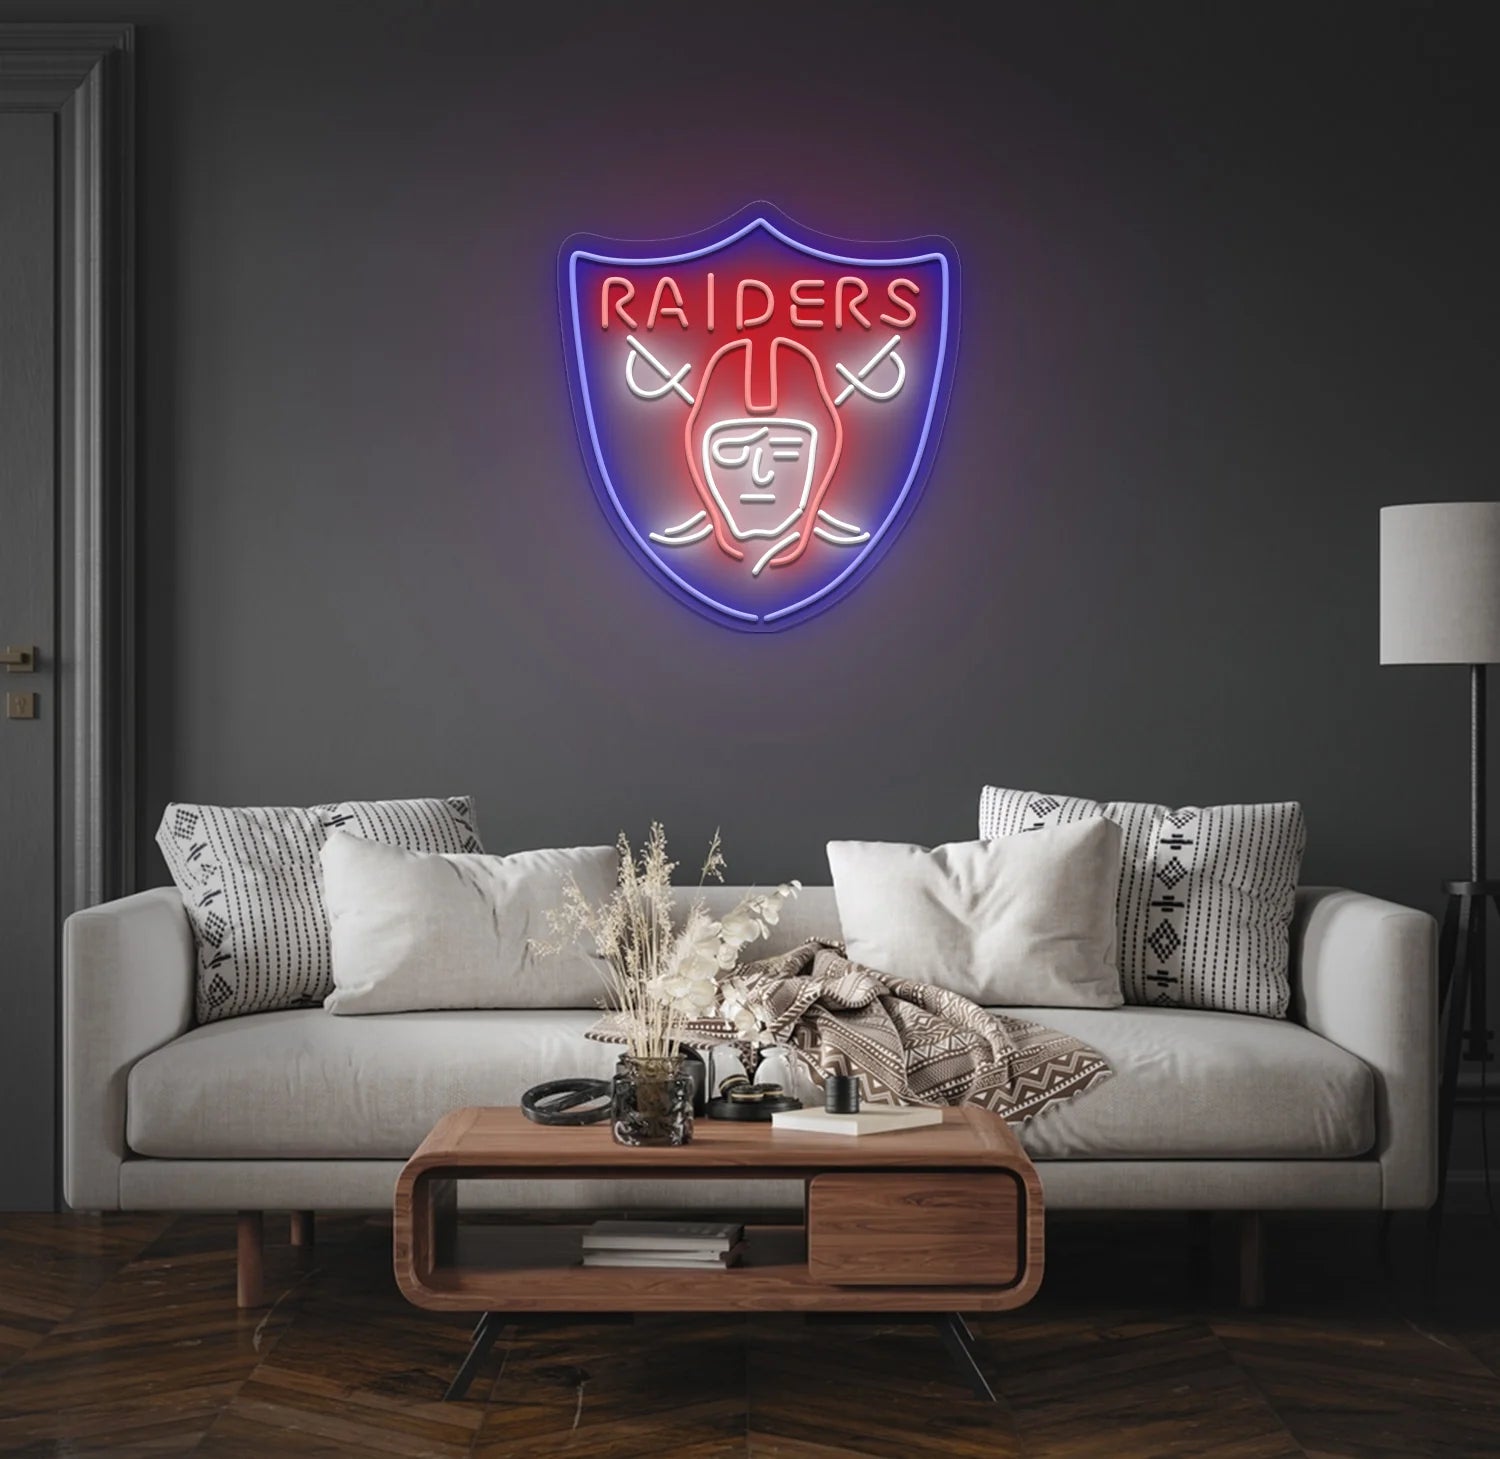 Premium Raiders Neon Sign for Club Decor - Limited Edition